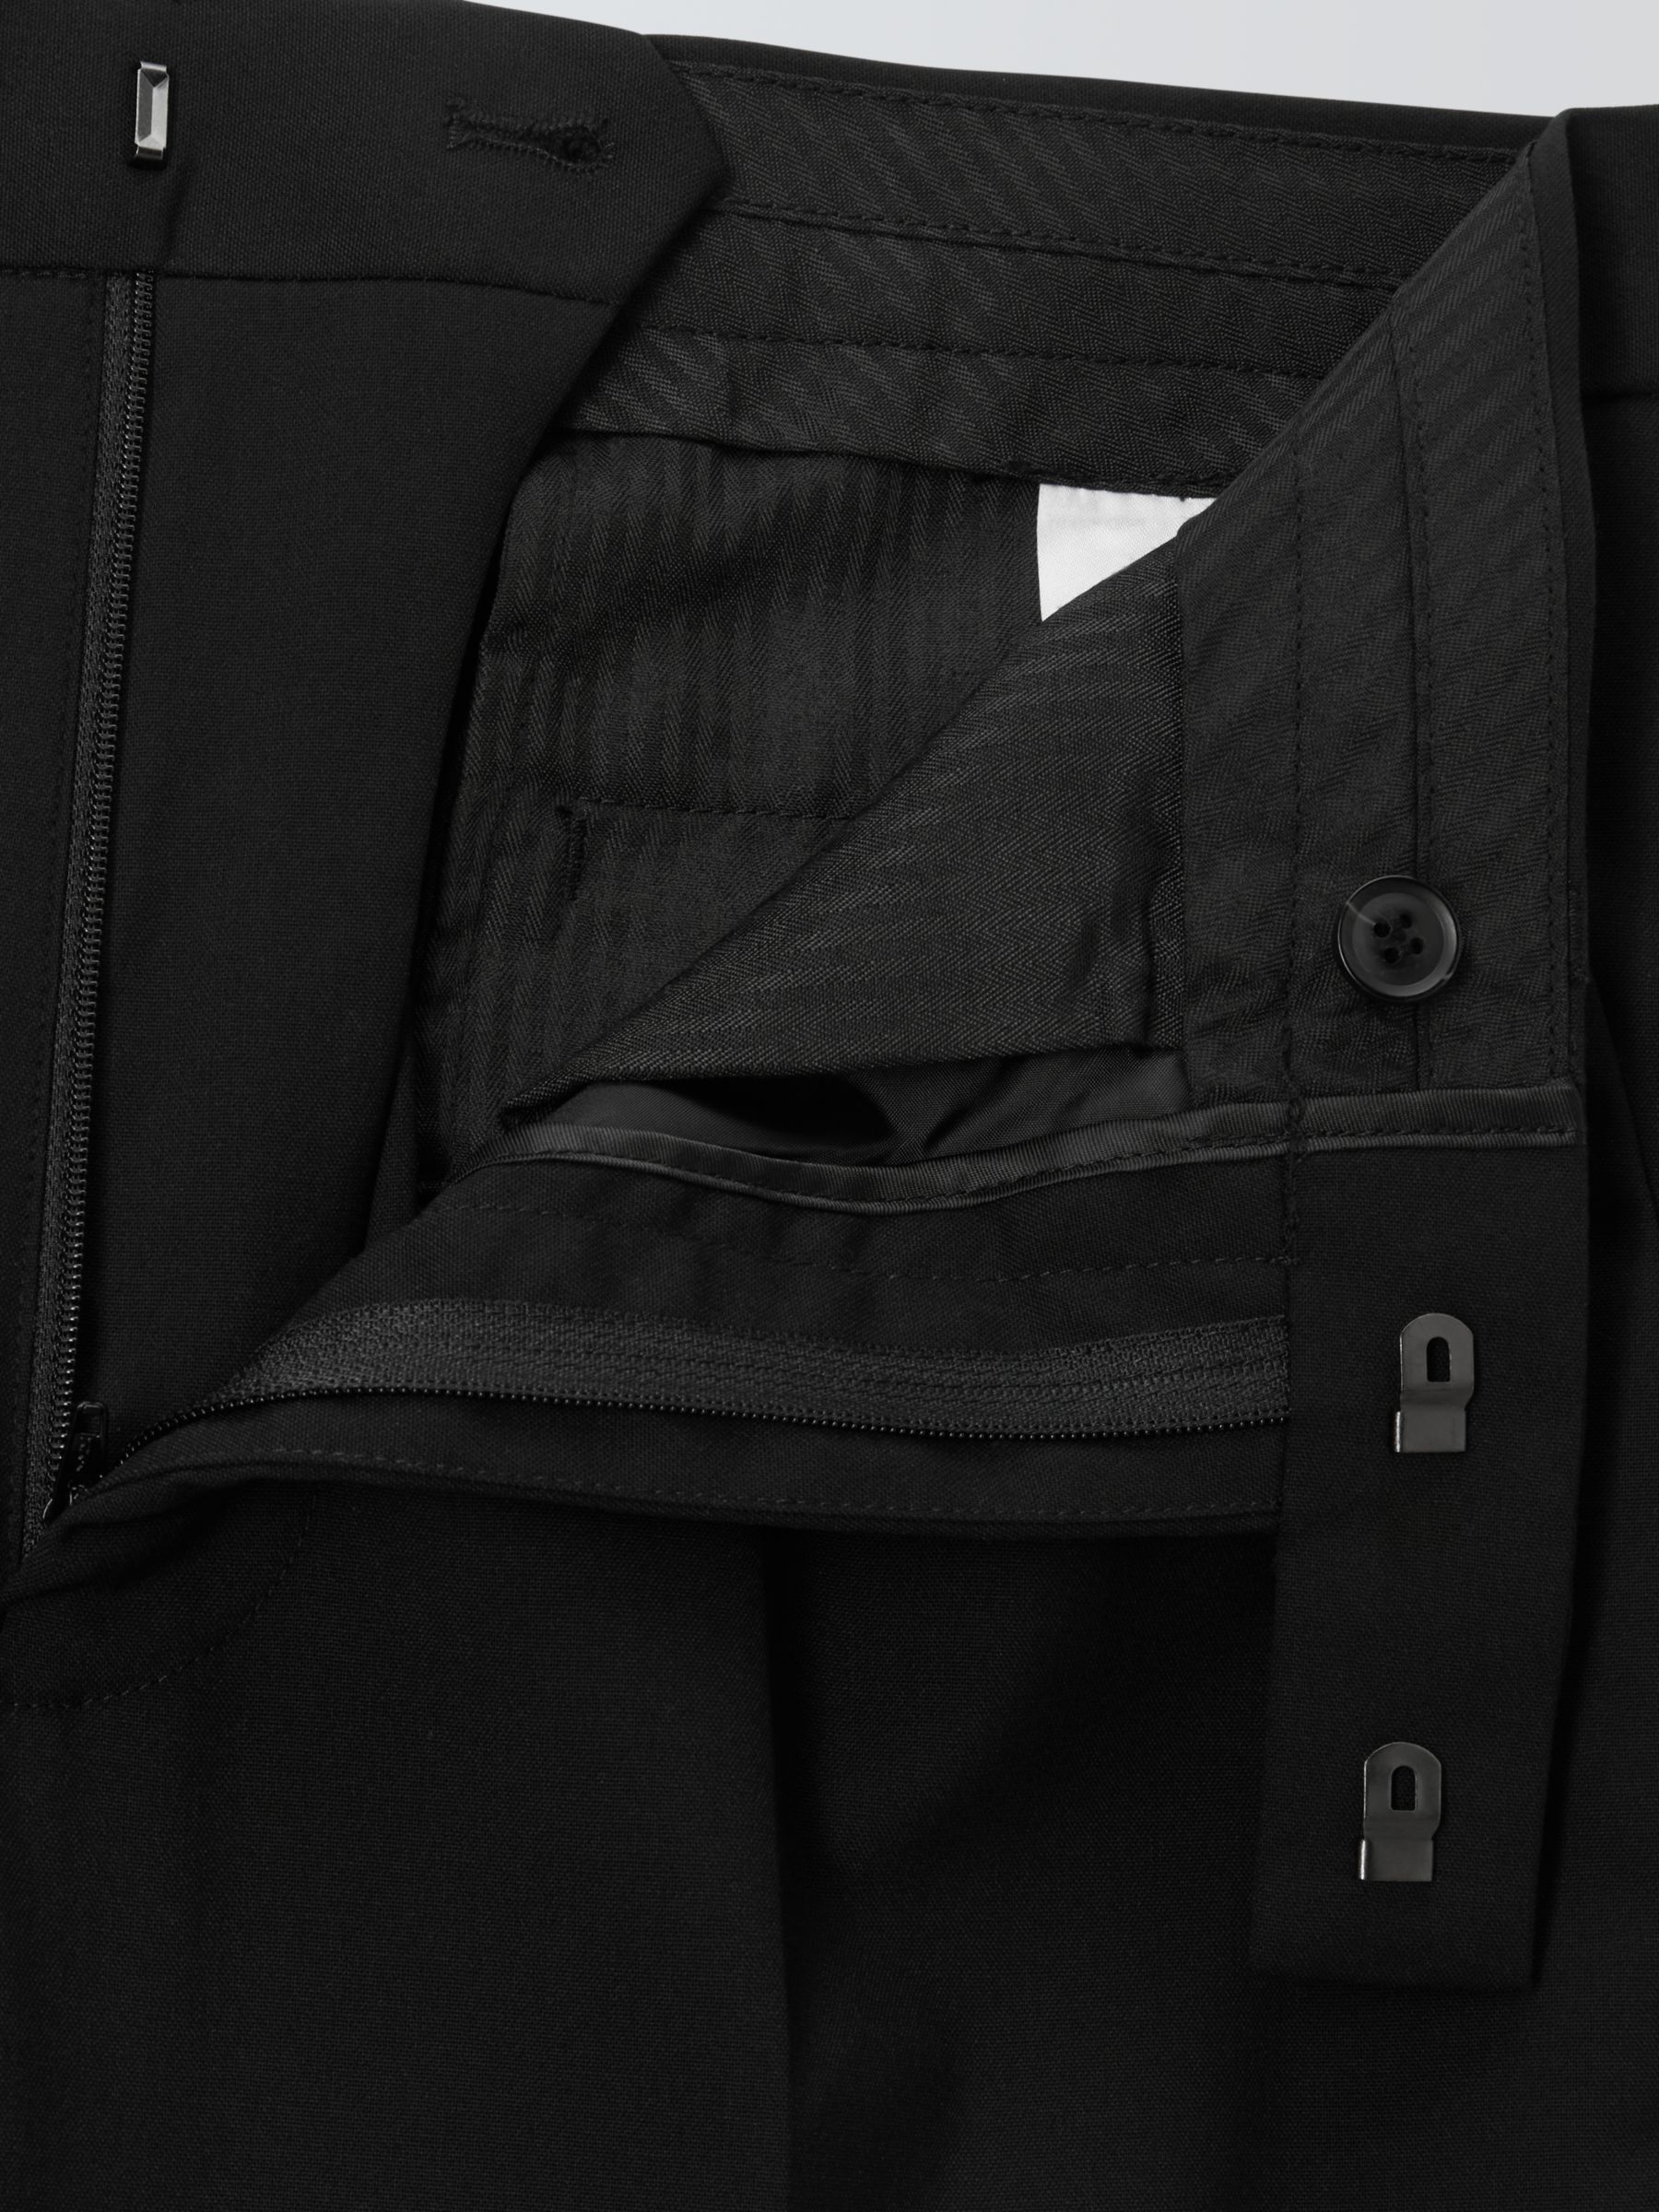 John Lewis Slim Fit Starter Suit Trousers, Black, 30R